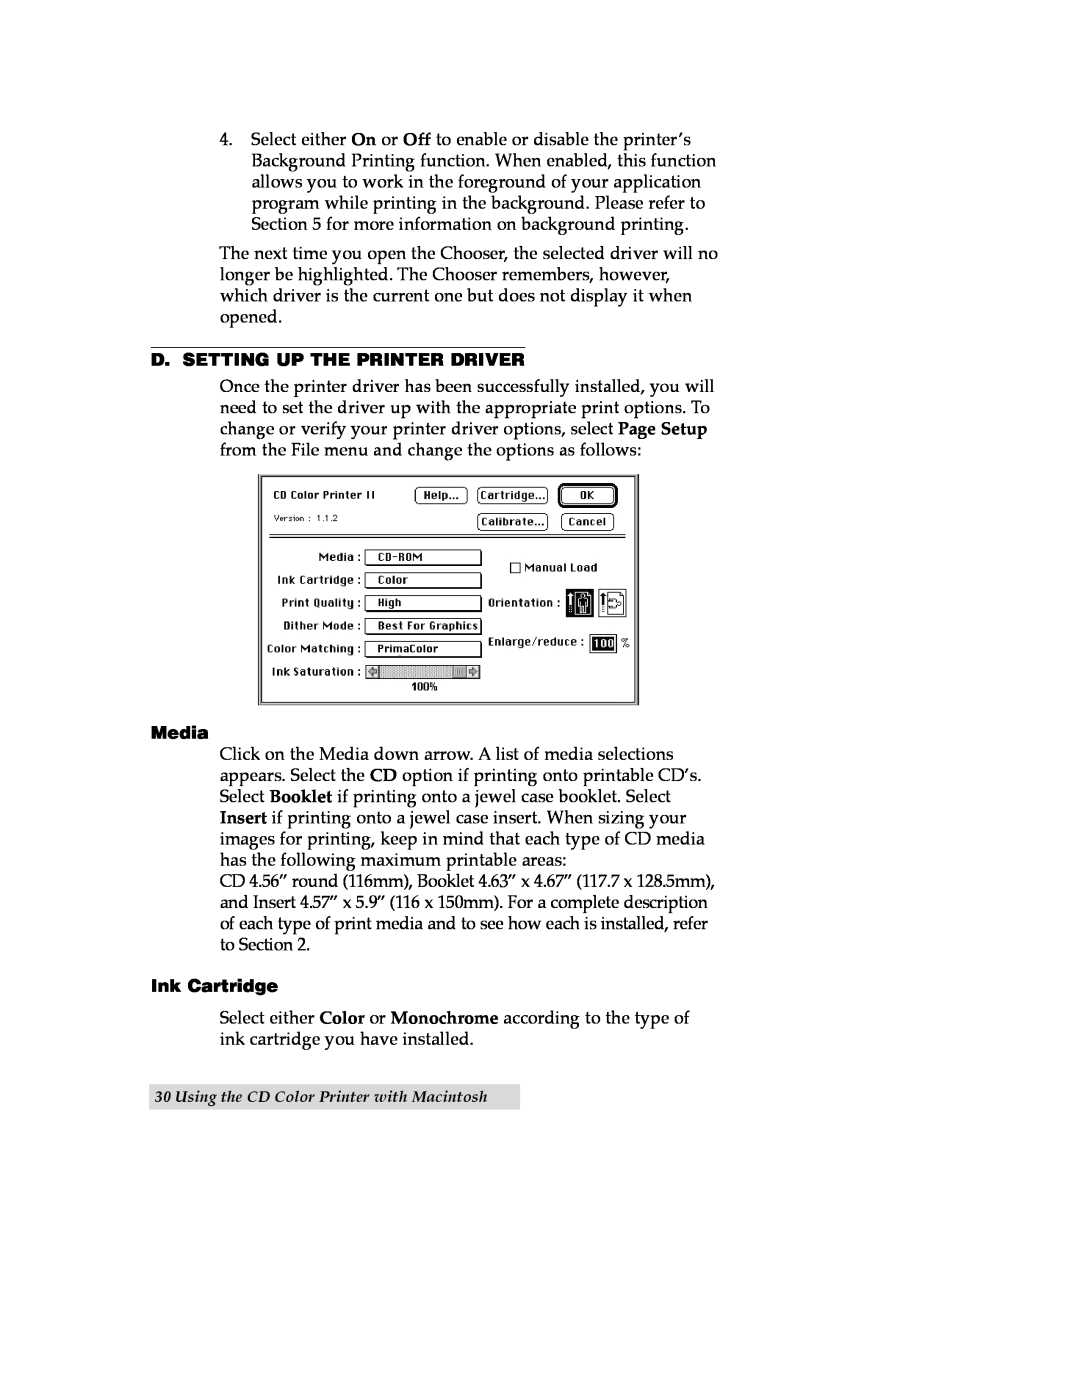 Primera Technology CD Color Printer II manual D. Setting Up The Printer Driver, Media, Ink Cartridge 